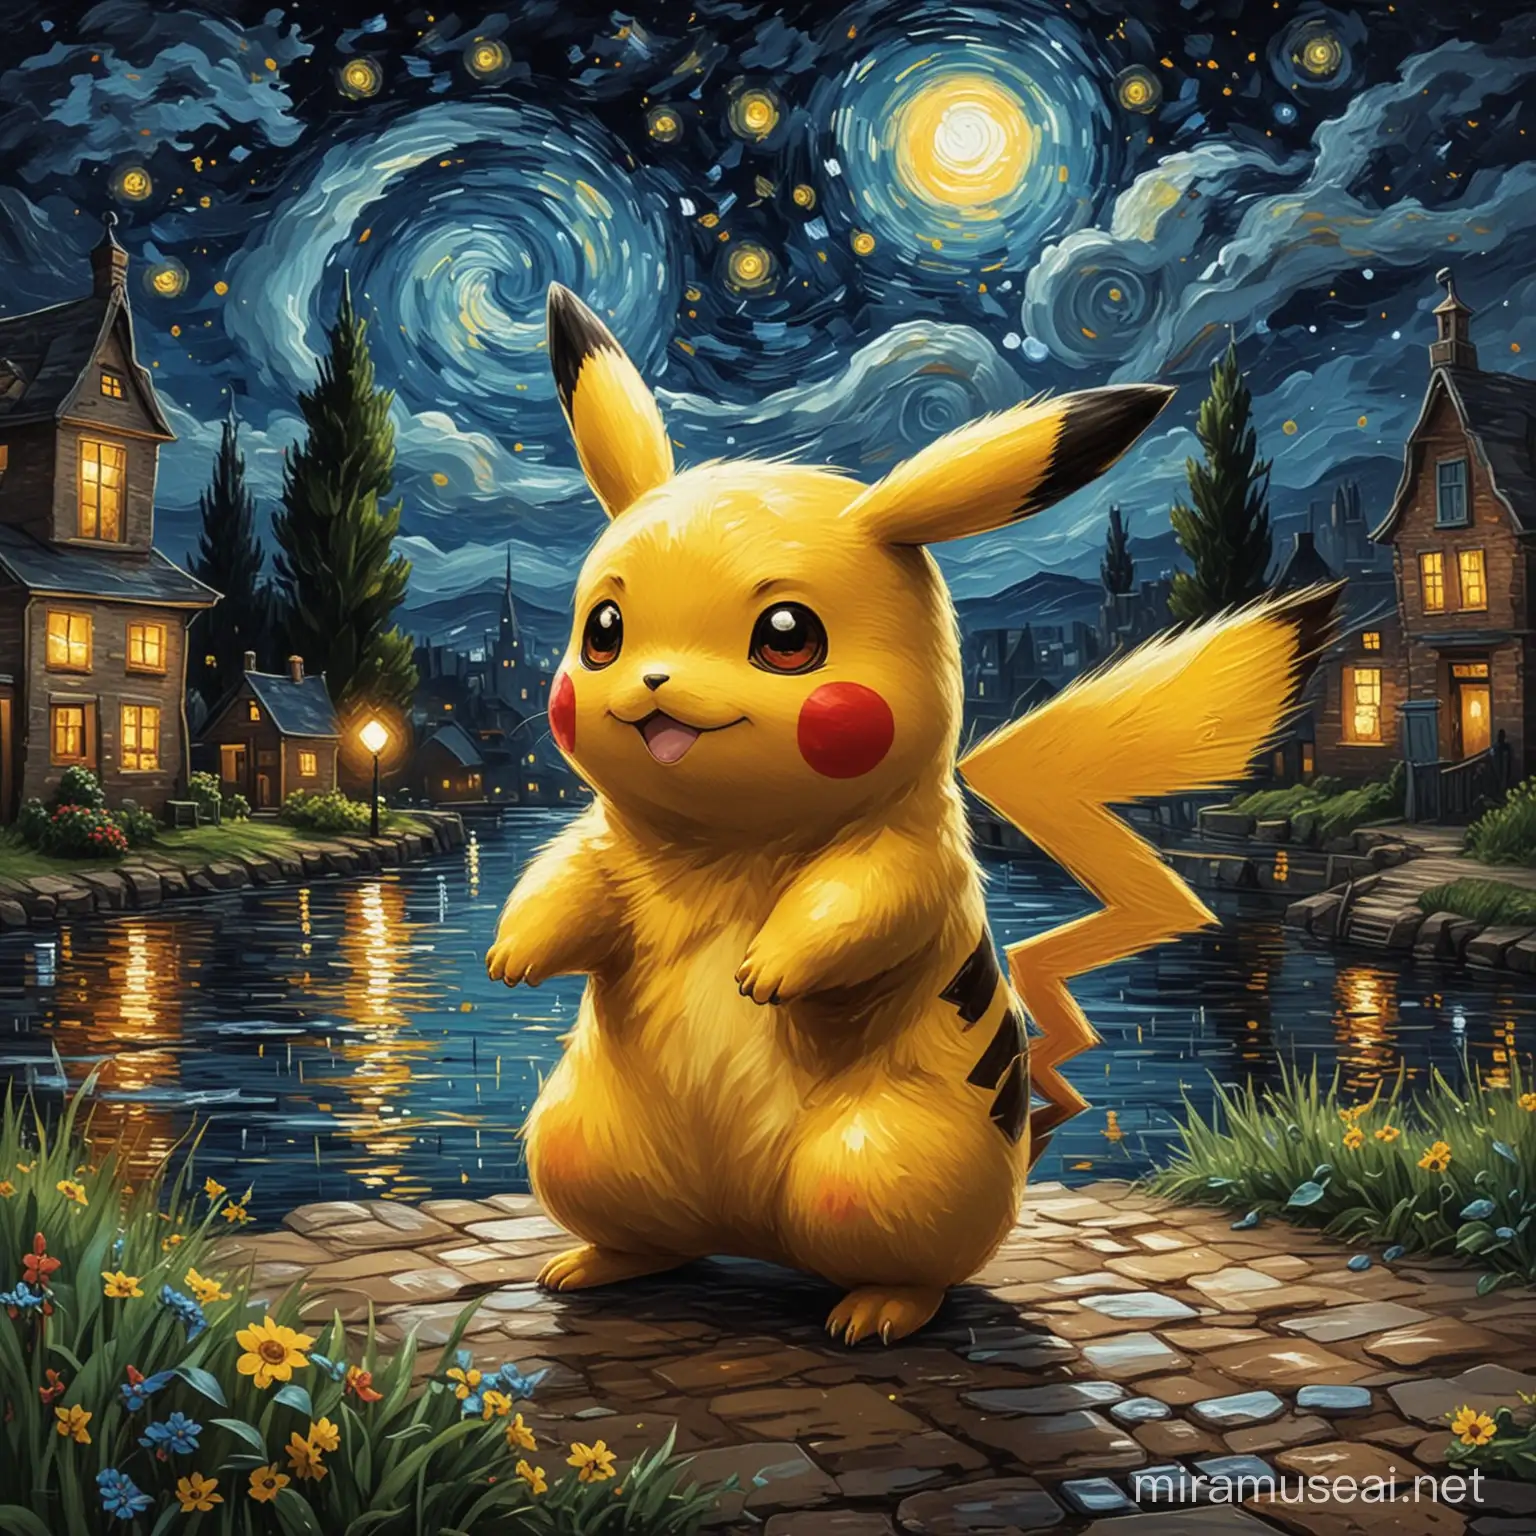 Starry Night Pikachu A Pokemon Van Gogh Inspired Art